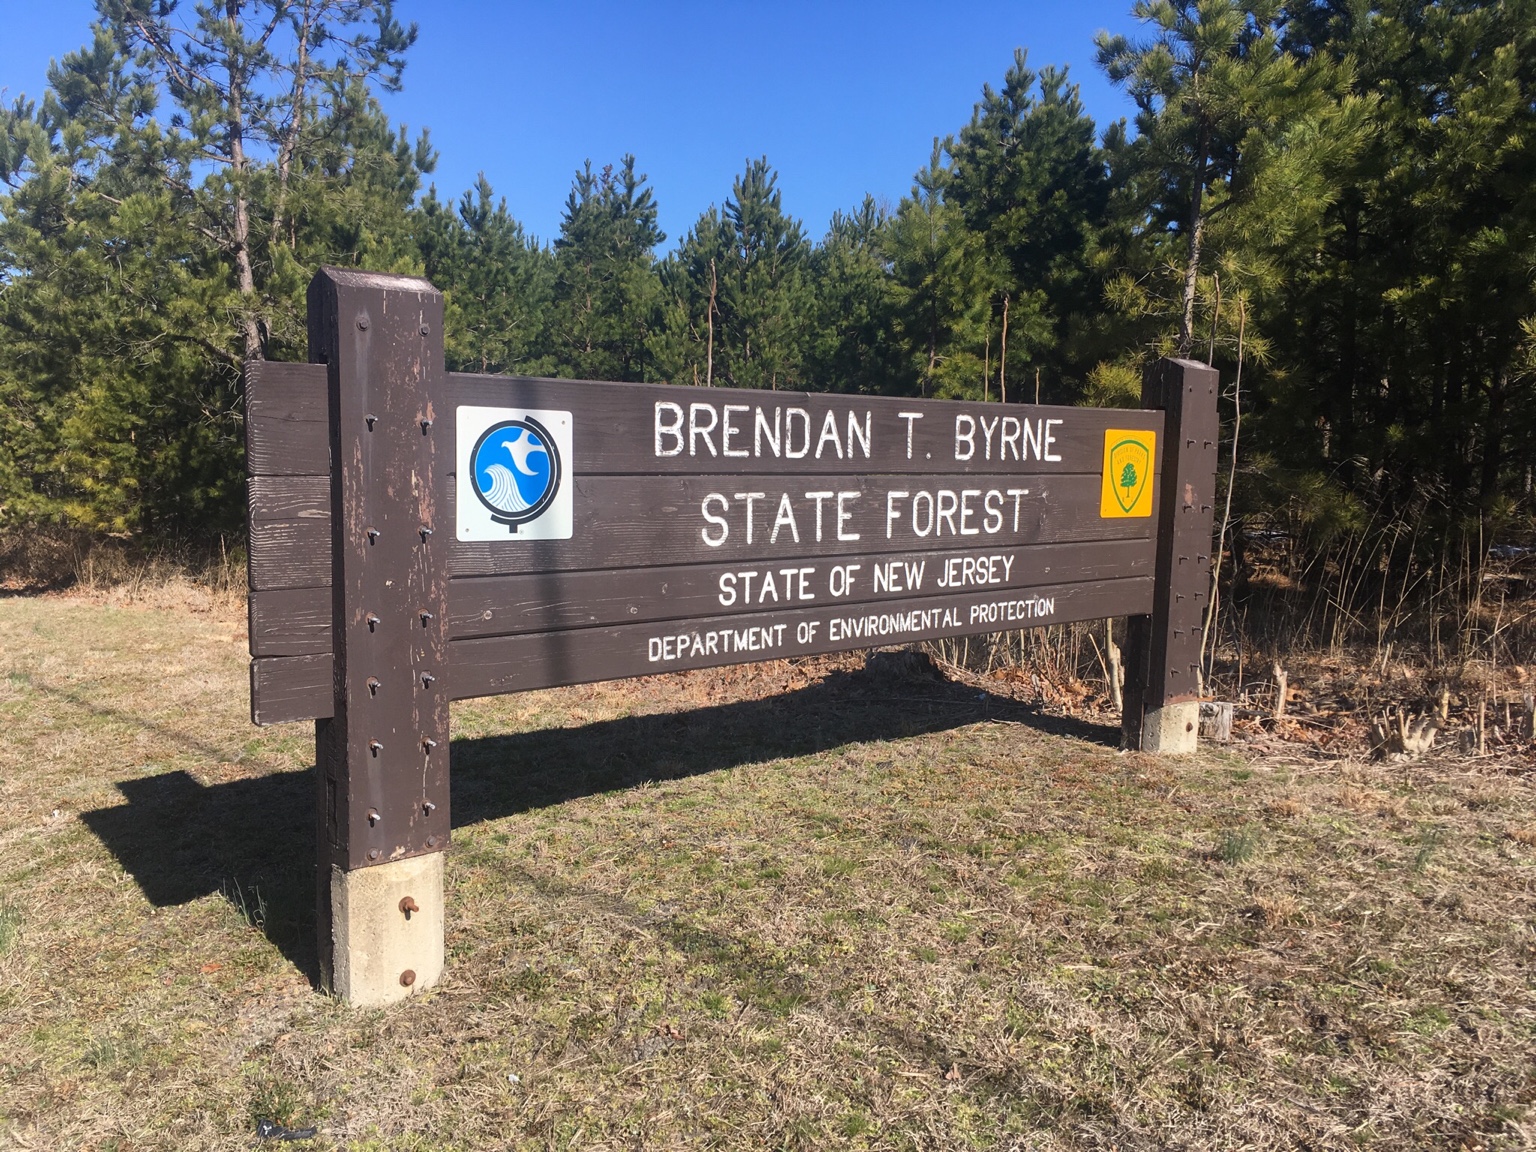 Brendan T. Byrne State Forest March 17, 18, 19, 2017 Hammock